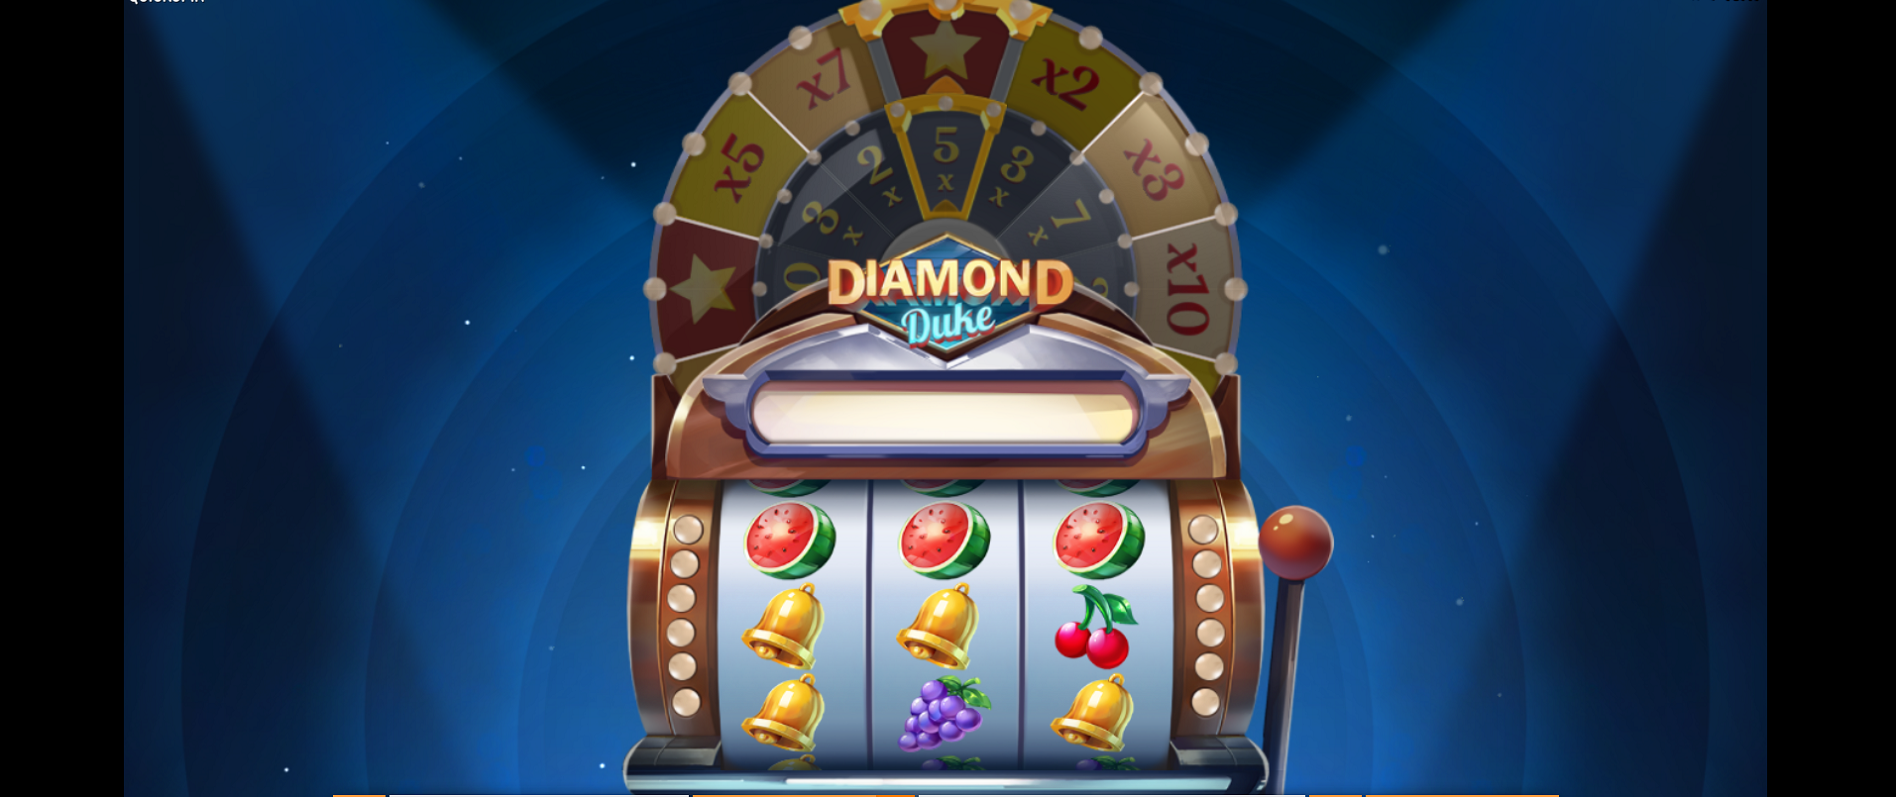 Diamon Duke - opis gry | Total Casino